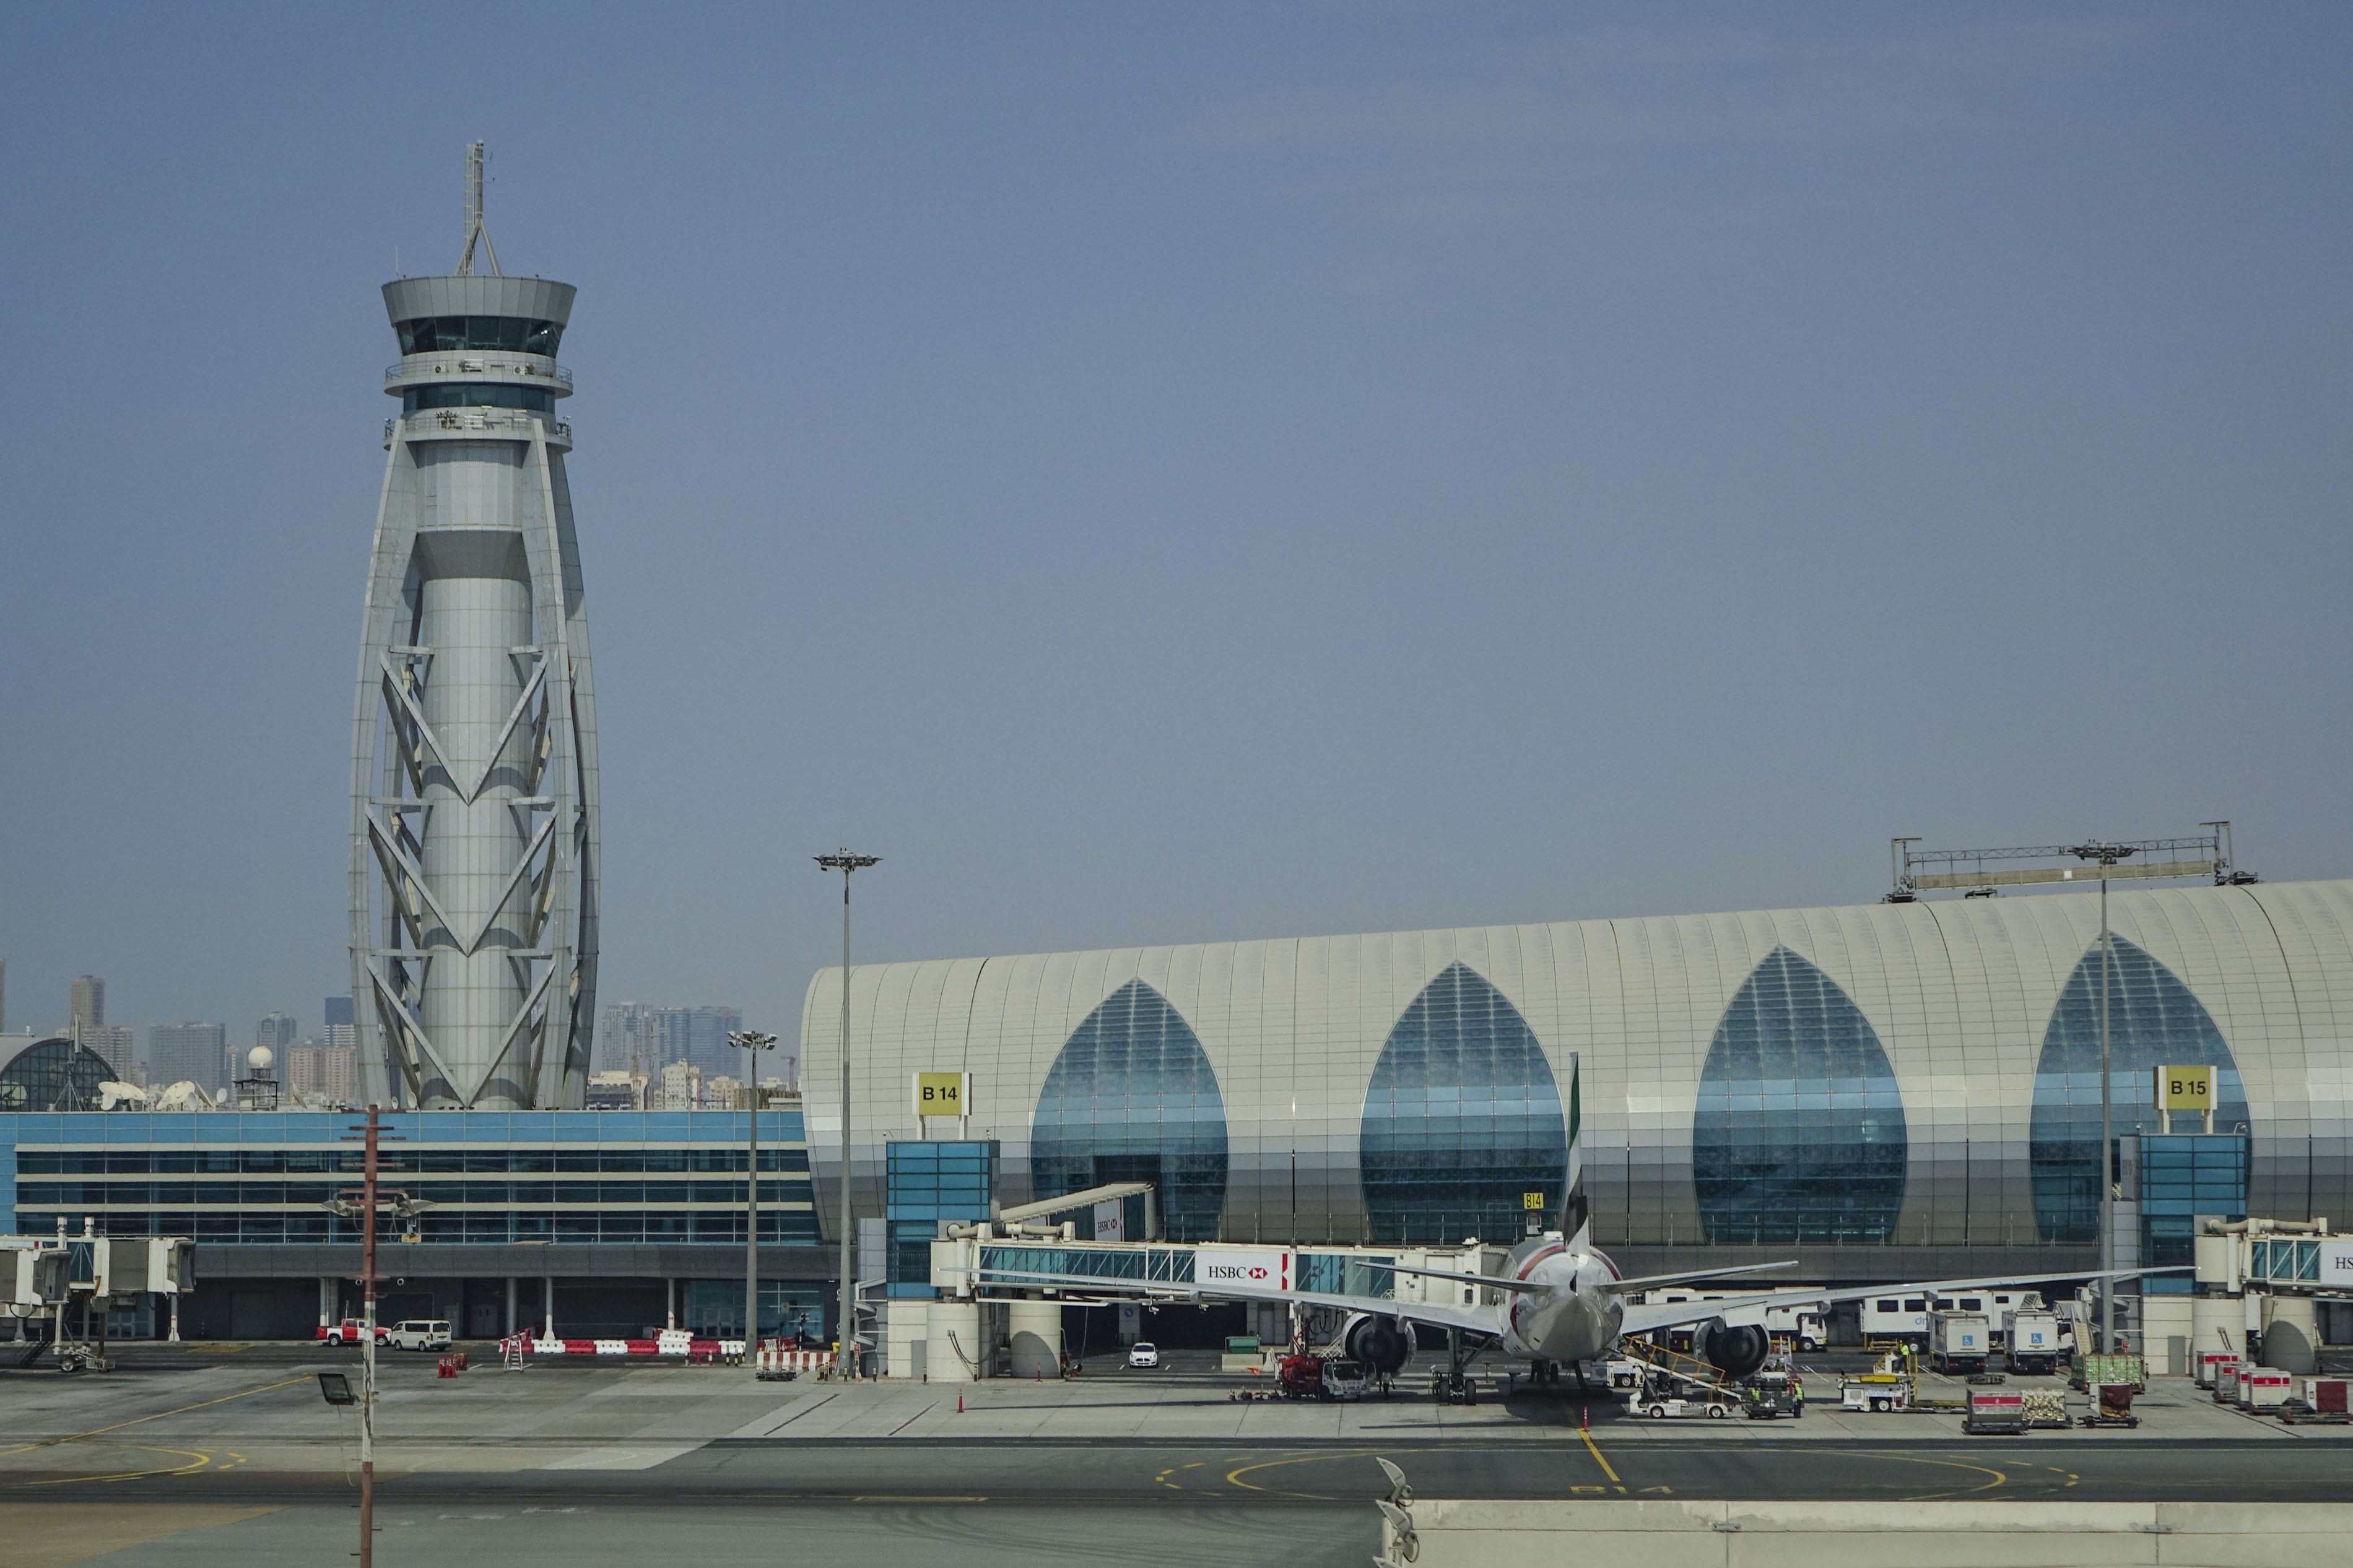 Suspected drone activity diverts two flights into Dubai: authorities